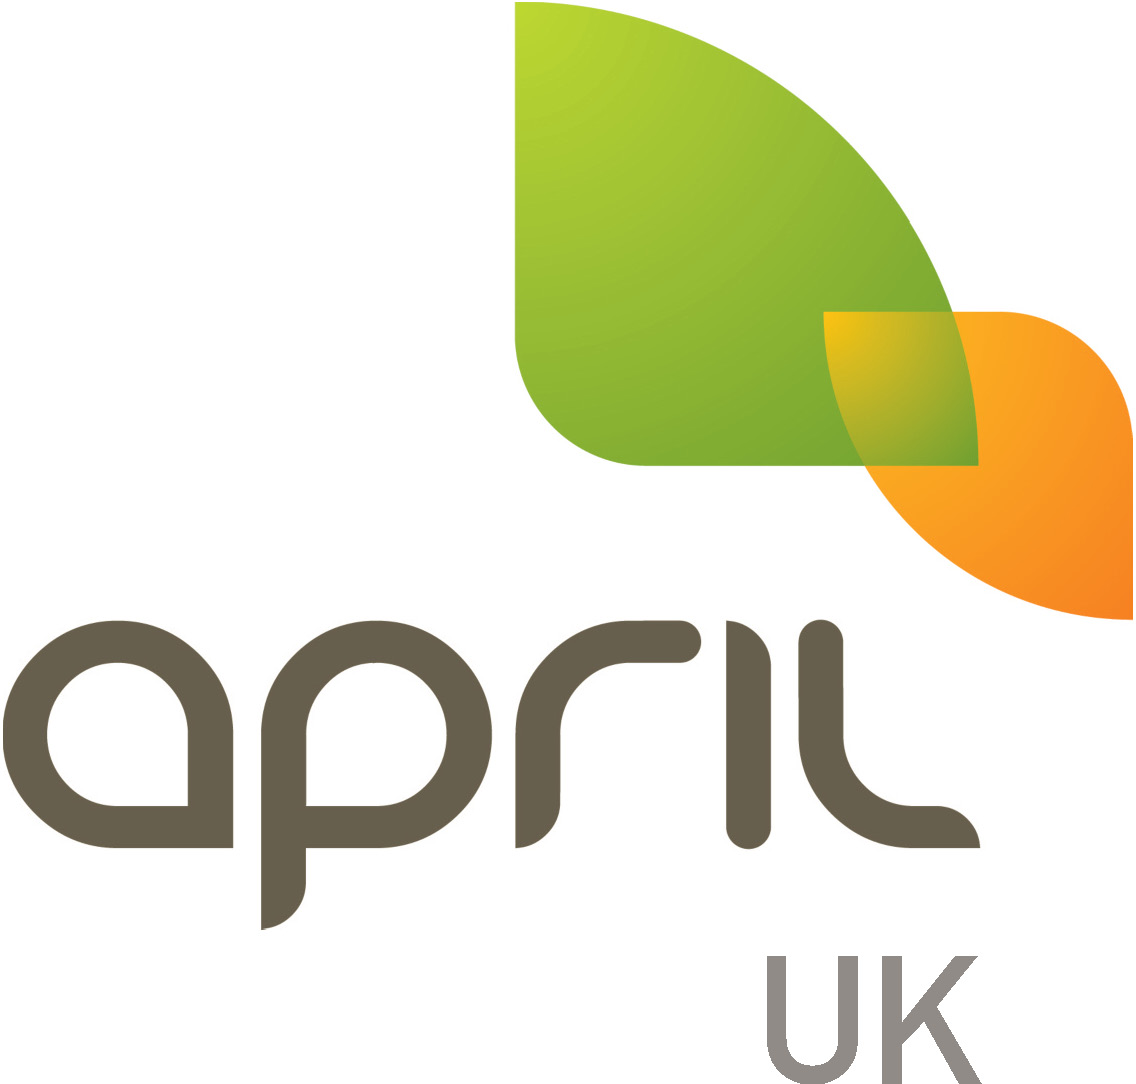 April UK logo